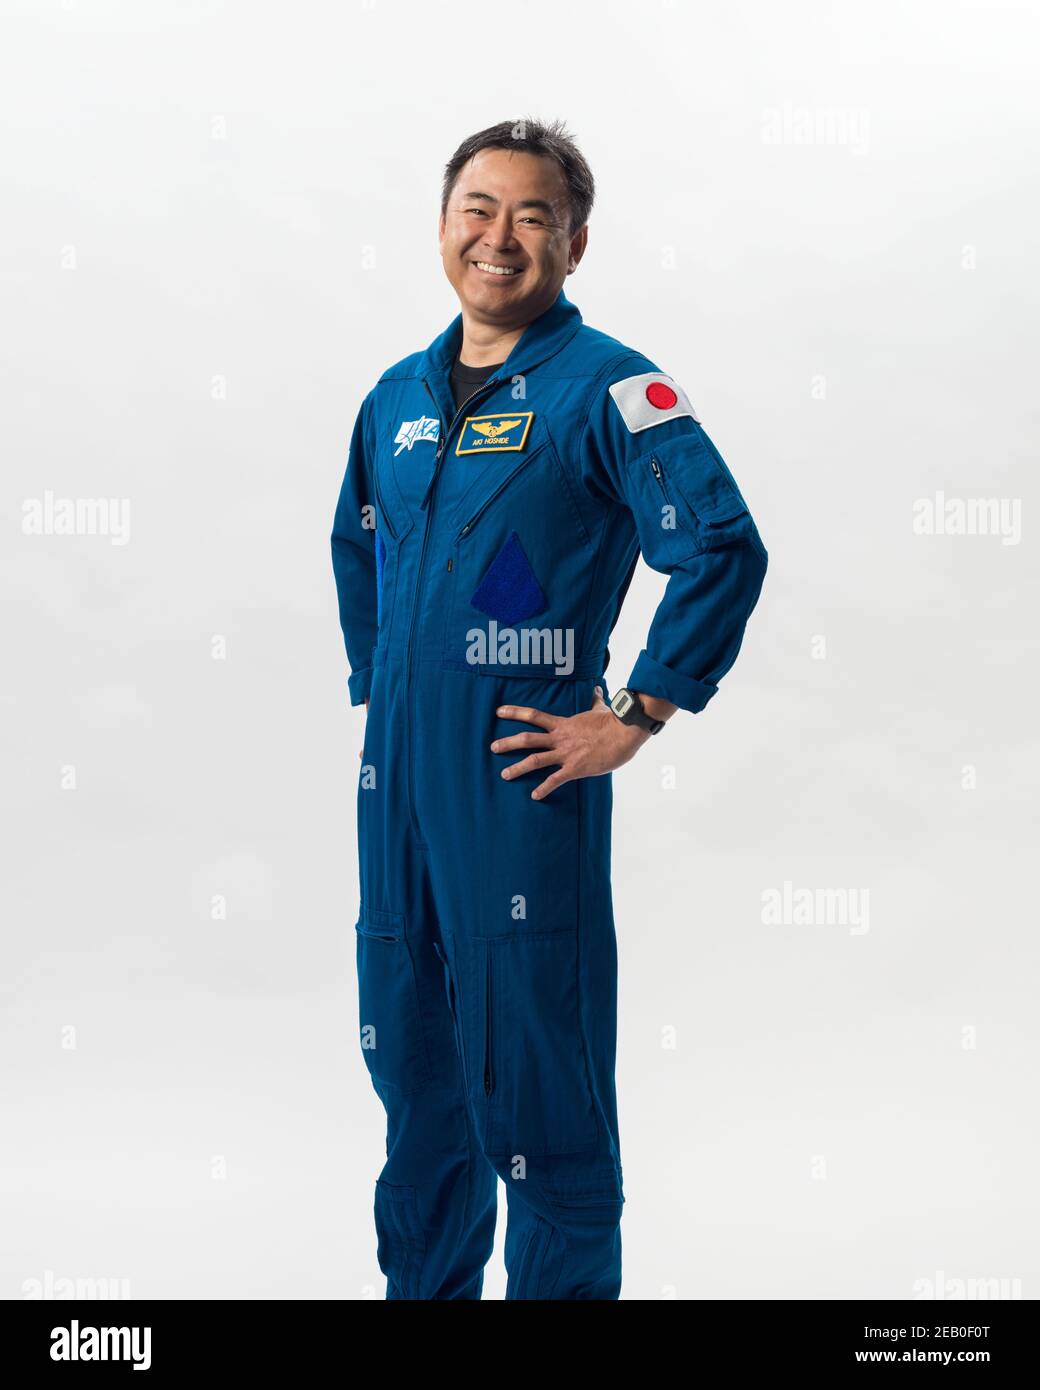 Japan Aerospace Exploration Agency Astronaut und SpaceX Crew-2 Mission Specialist Akihiko Hoshide Portrait im Johnson Space Center 29. September 2020 in Houston, Texas. Stockfoto